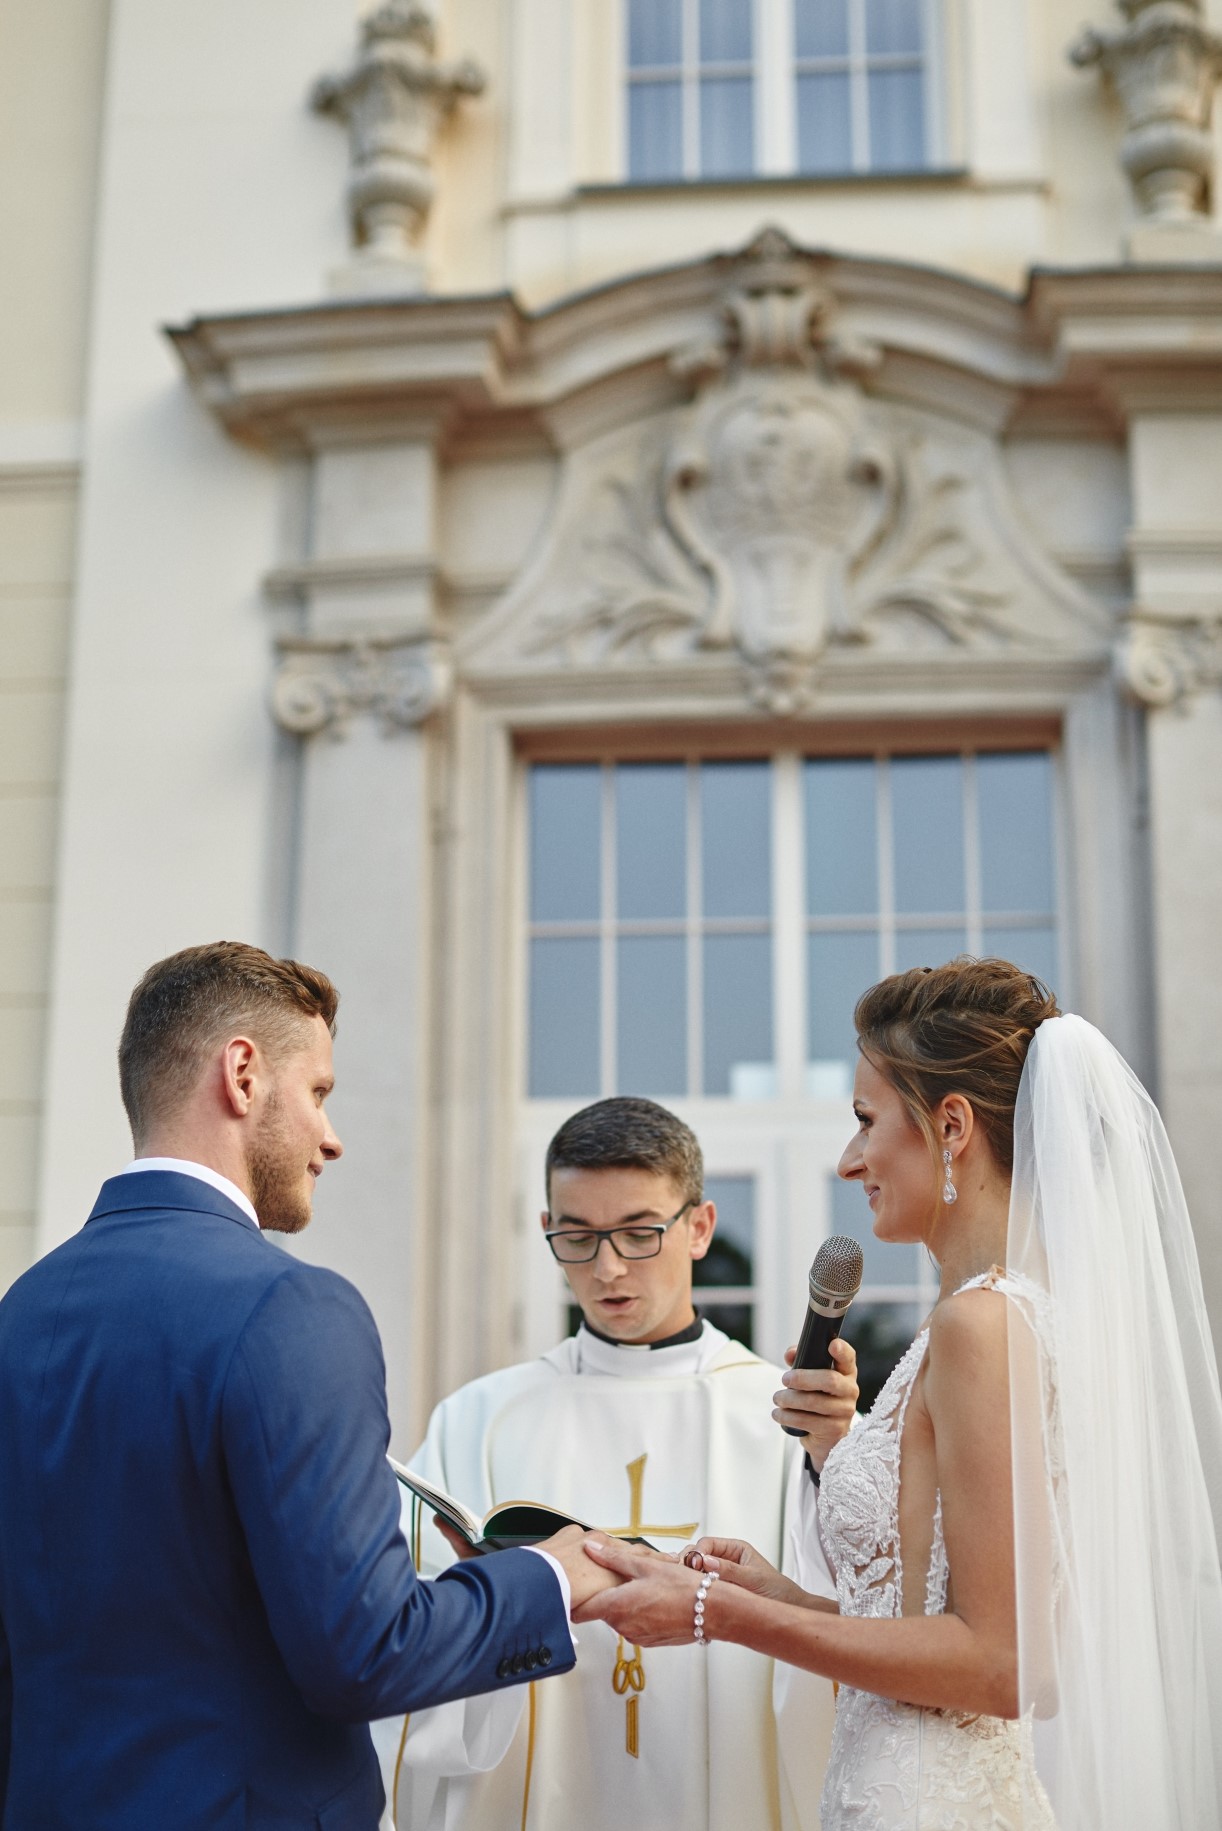 Slub Koscielny Ile Kosztuje Katolicka Ceremonia Wedding Dream